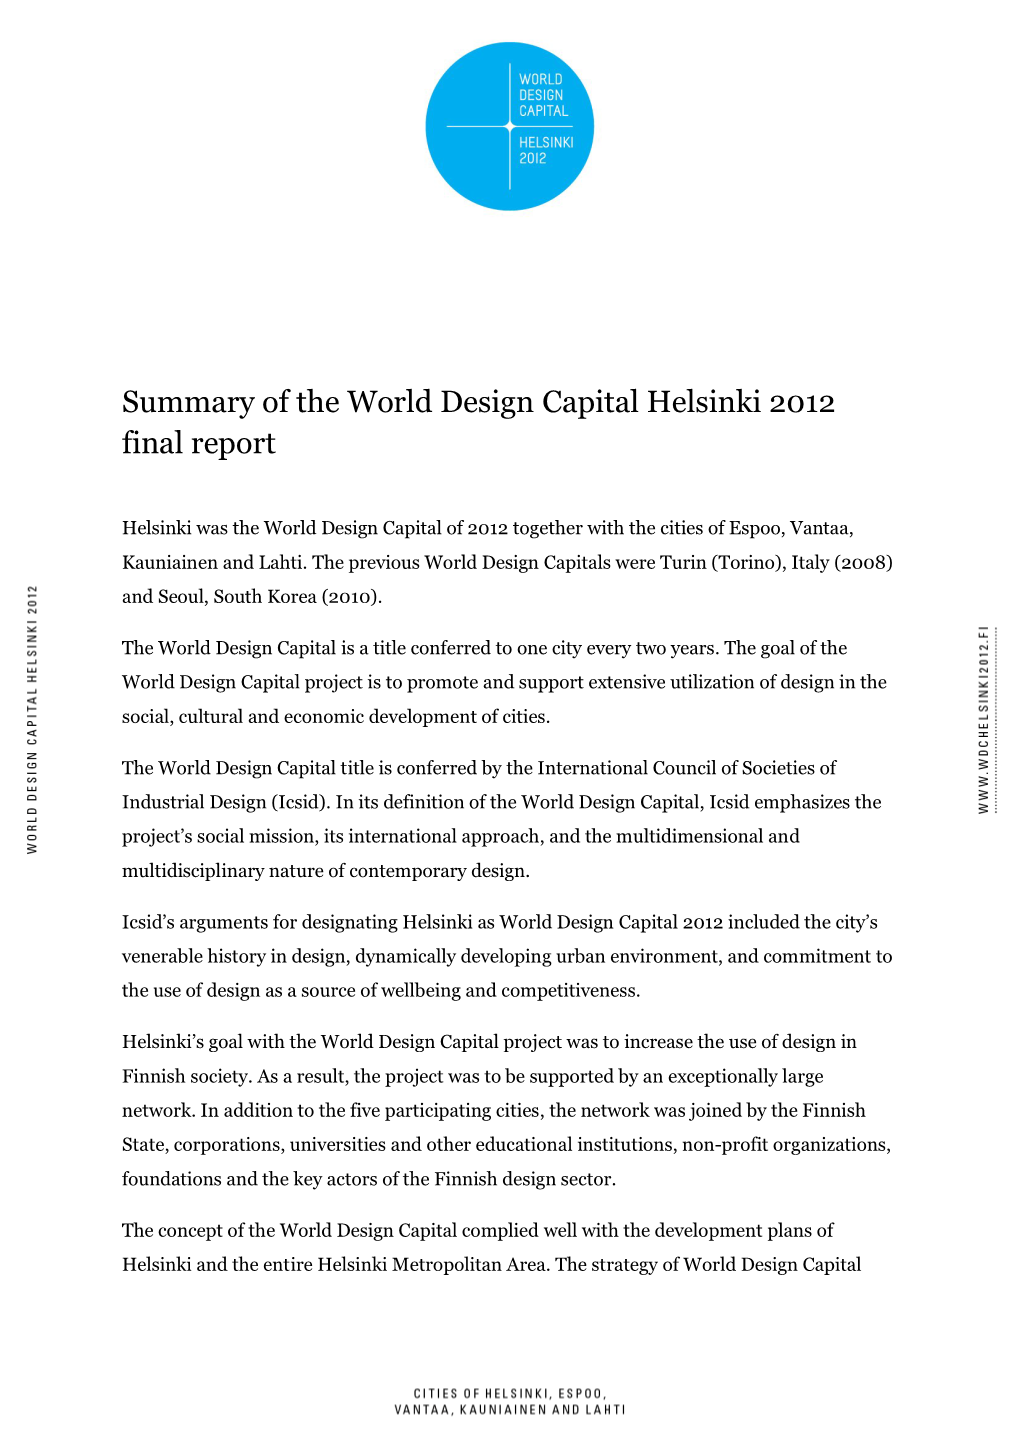 Summary of the World Design Capital Helsinki 2012 Final Report